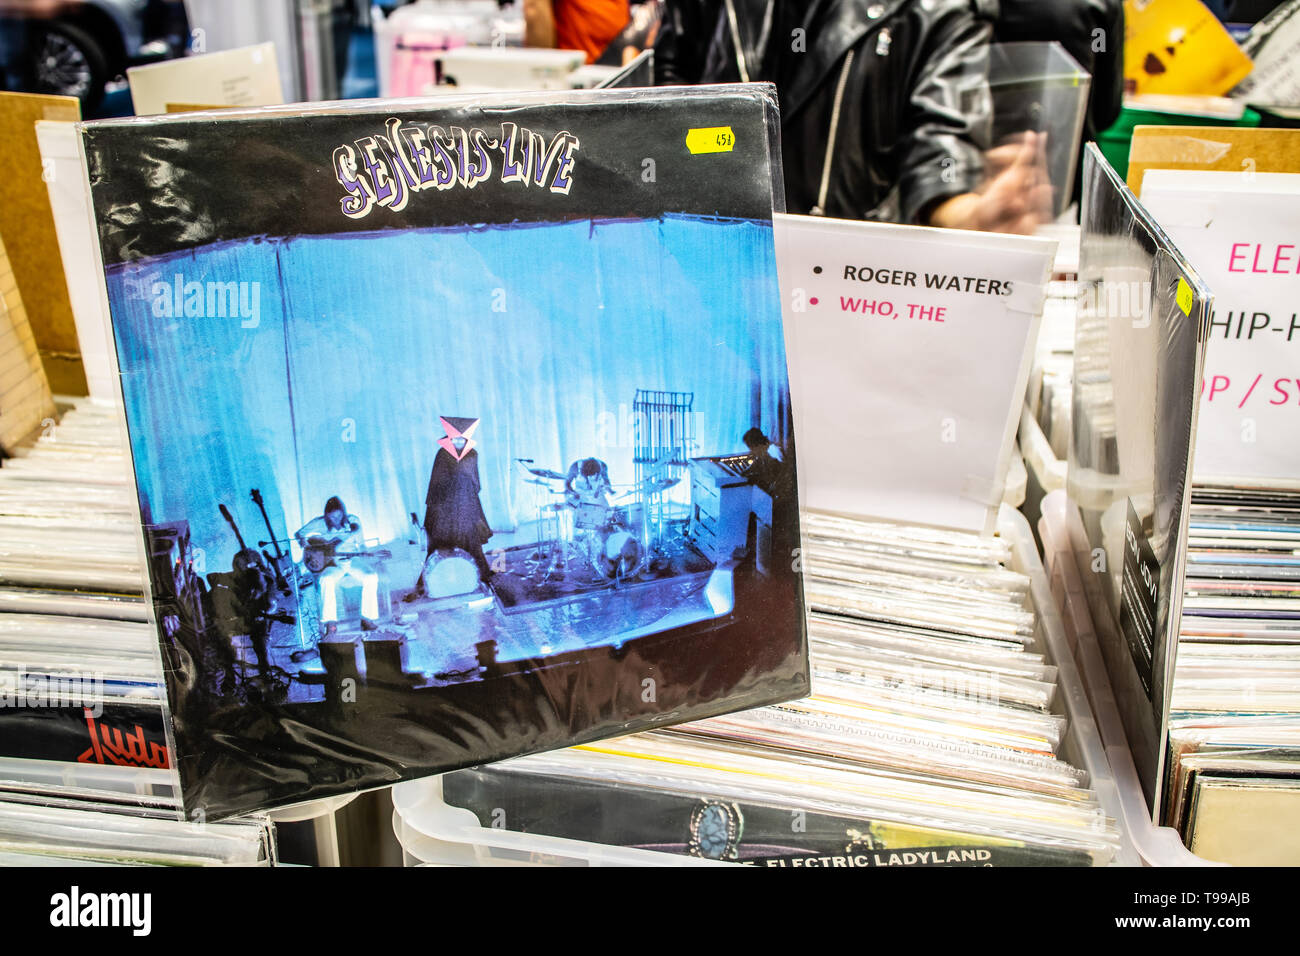 Nadarzyn, Poland, May 11, 2019: Genesis vinyl album on display for sale,  Vinyl, LP, Album, Pop Rock, English rock band, collection of Vinyl in back  Stock Photo - Alamy